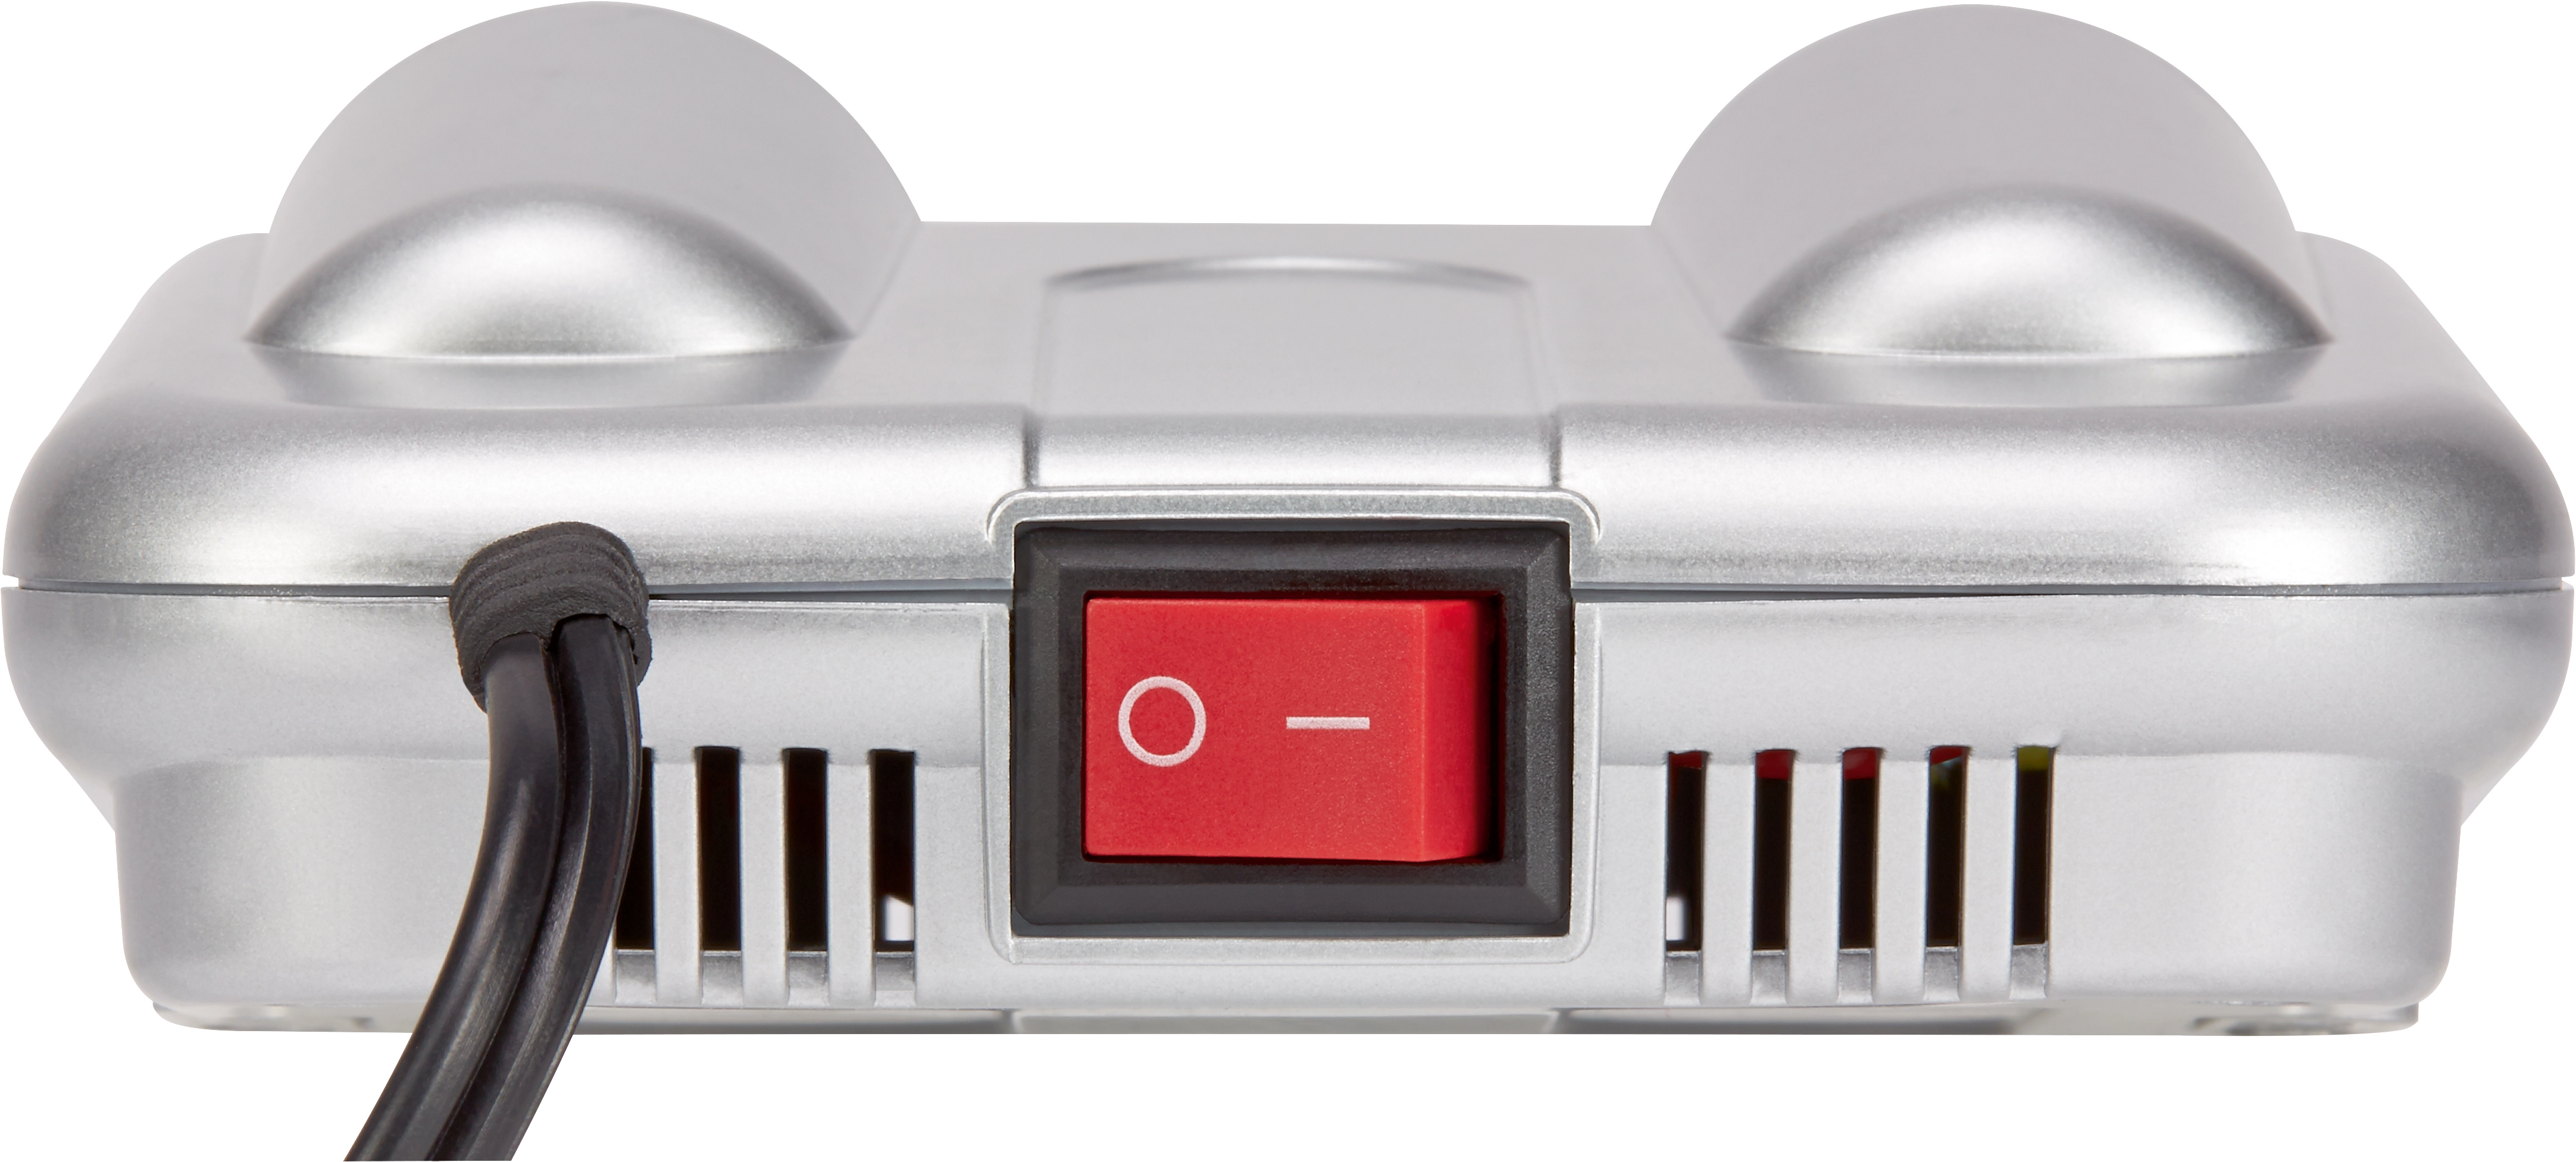 OBI Doppelsteckdose mit USB kaufen bei OBI